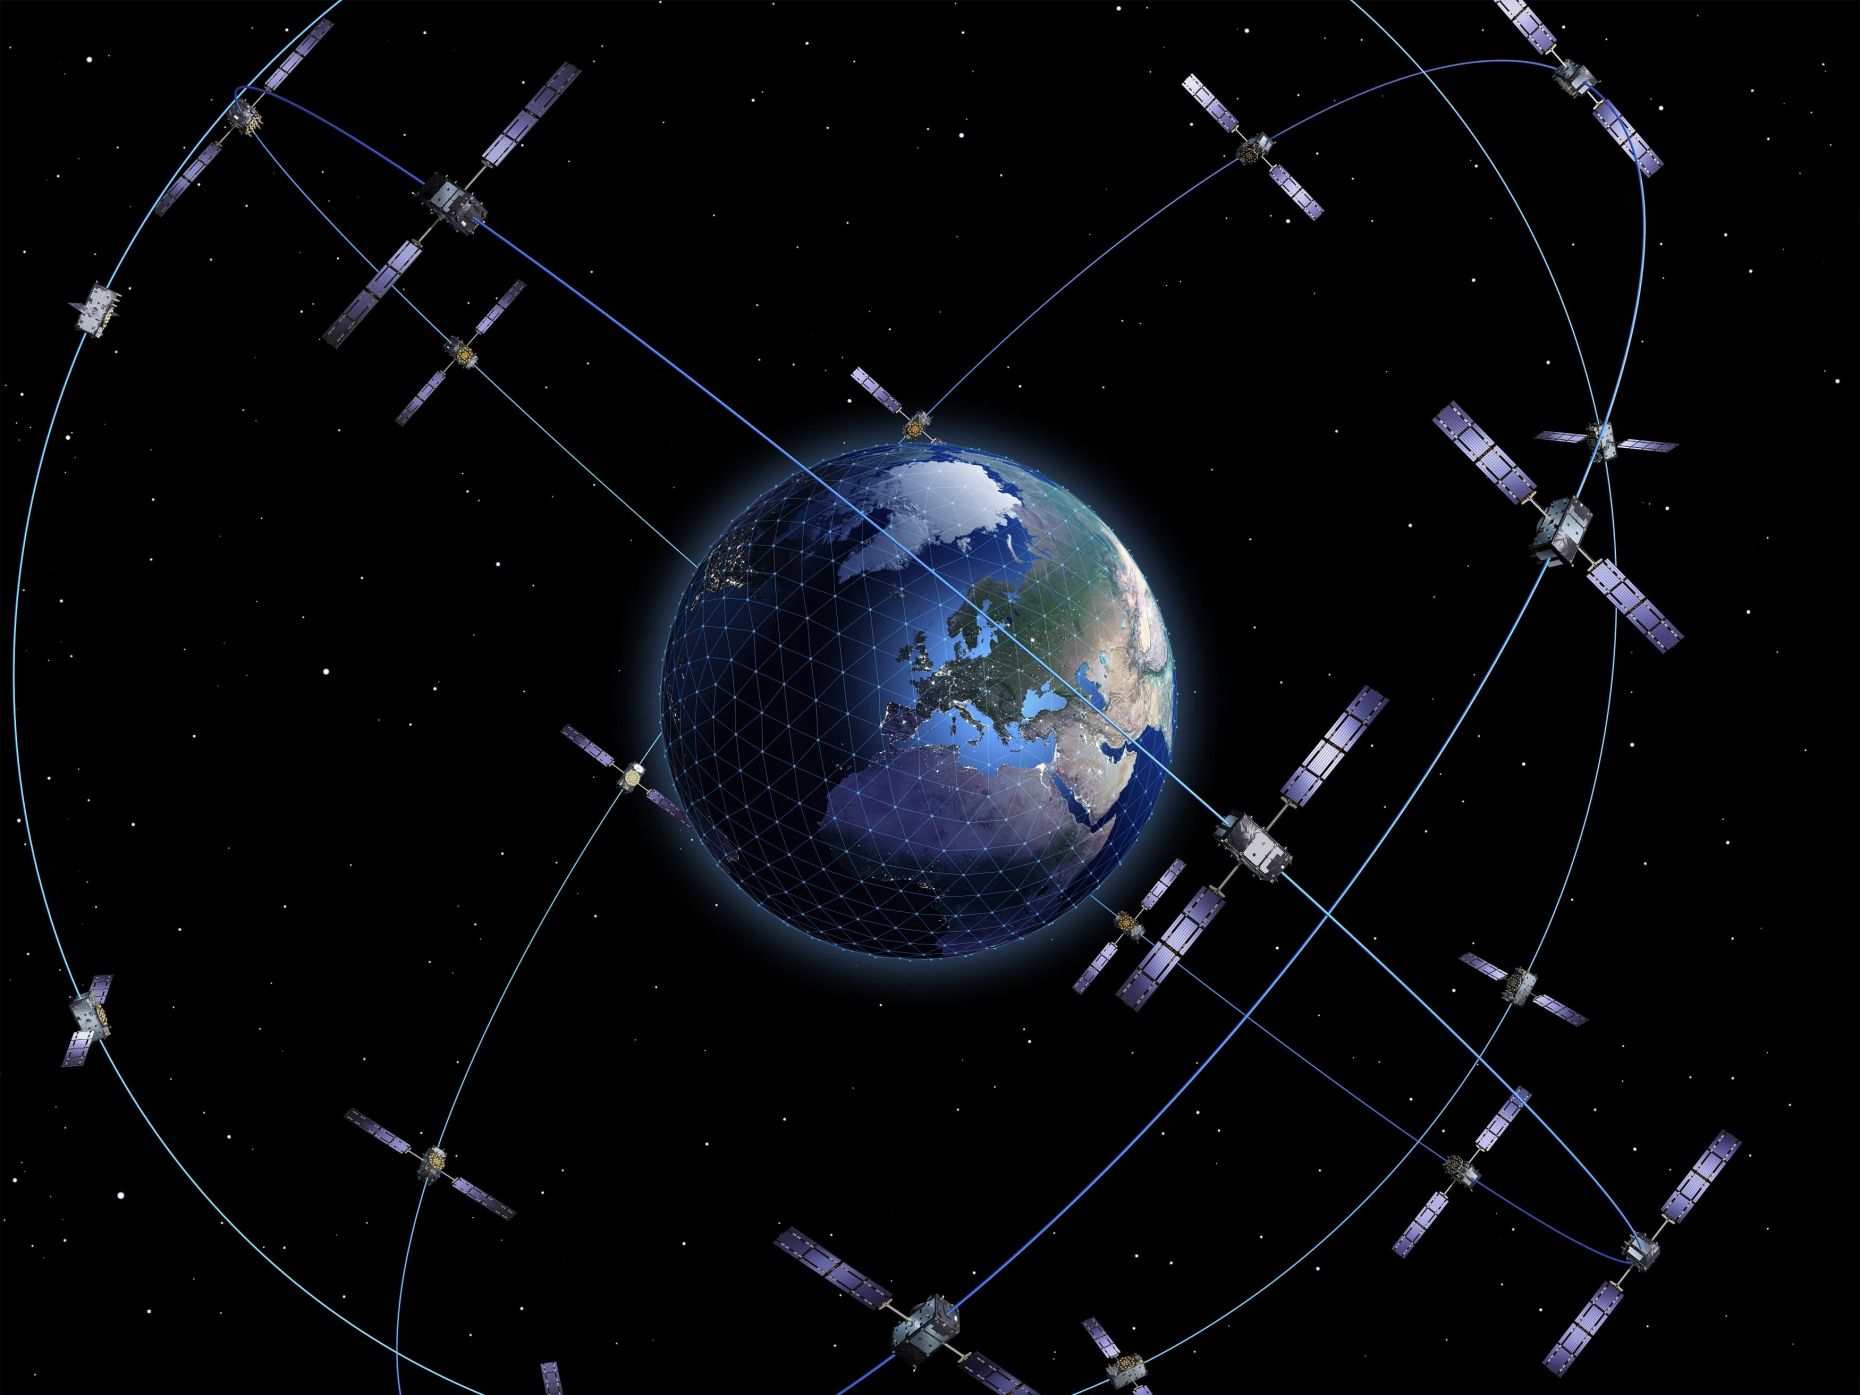 a constellation of 28 satellites orbiting in three orbital planes